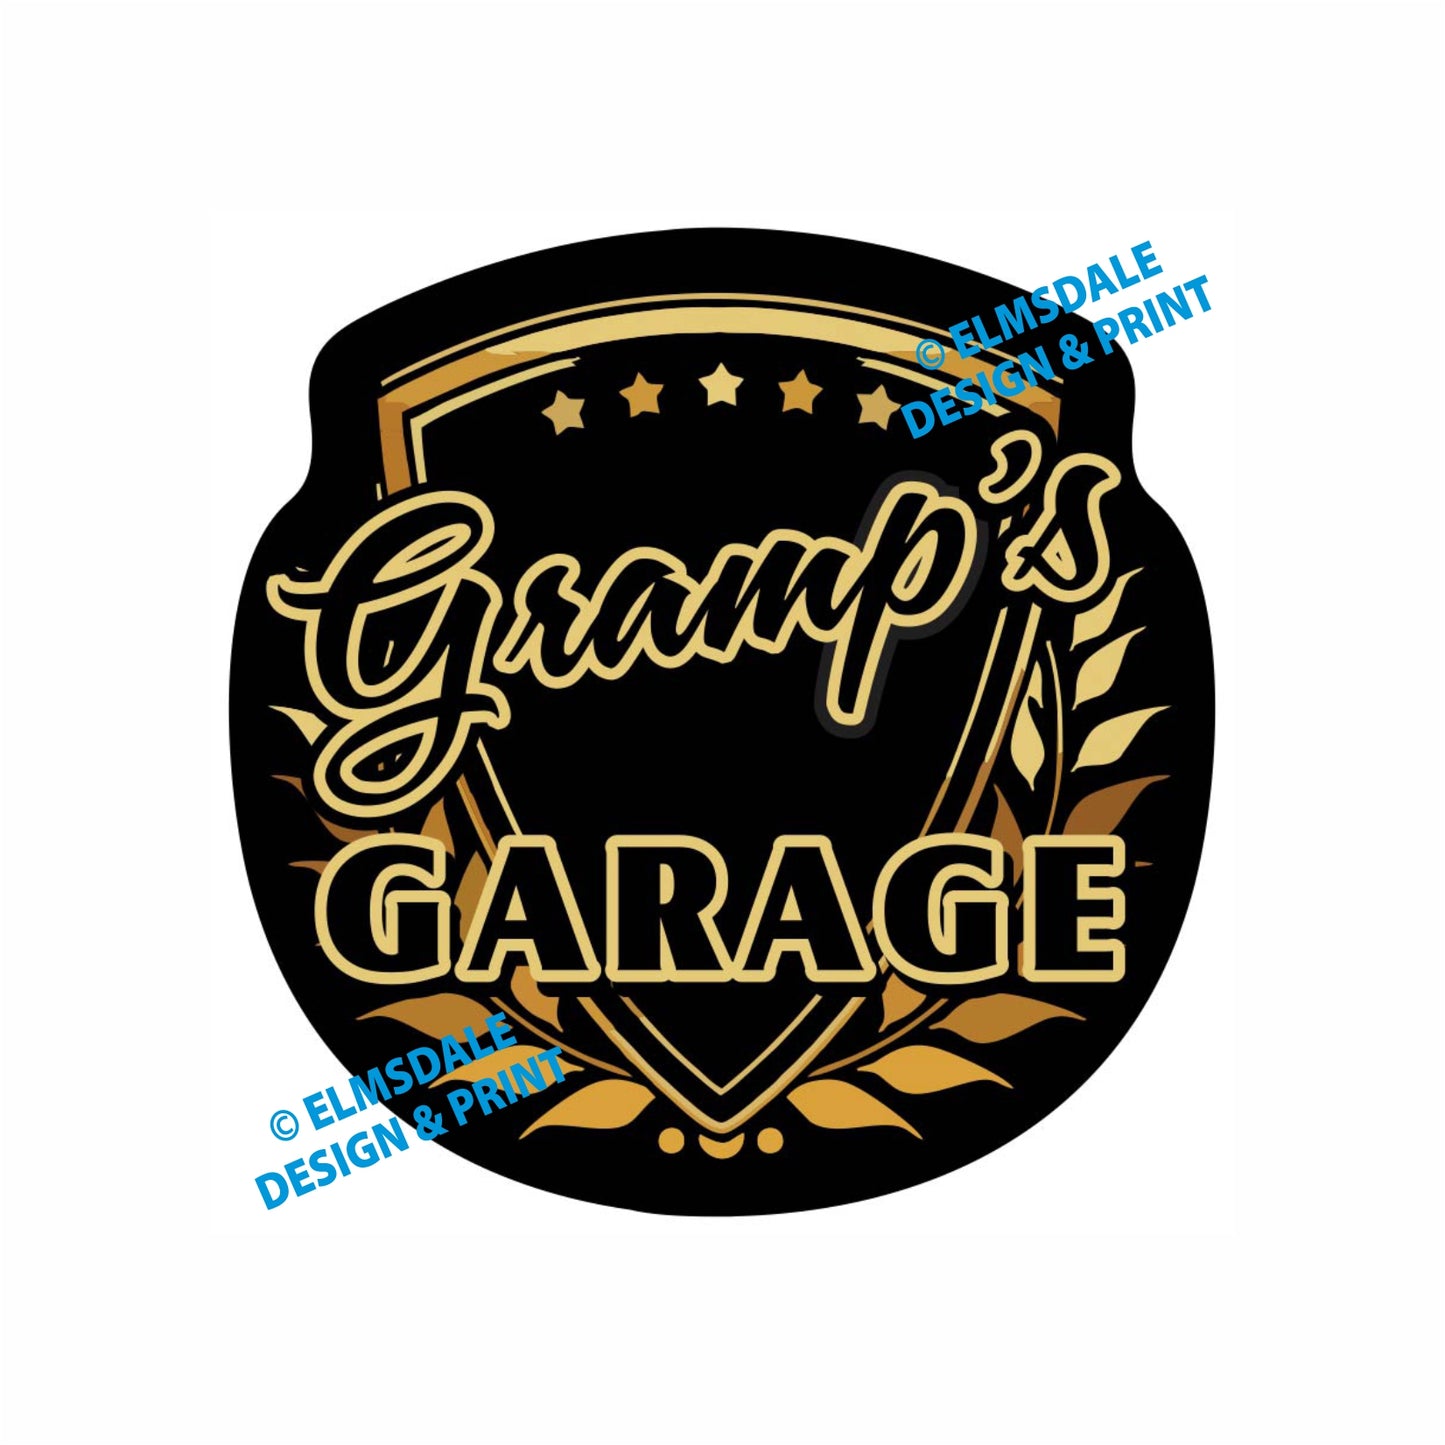 Gramps Garage